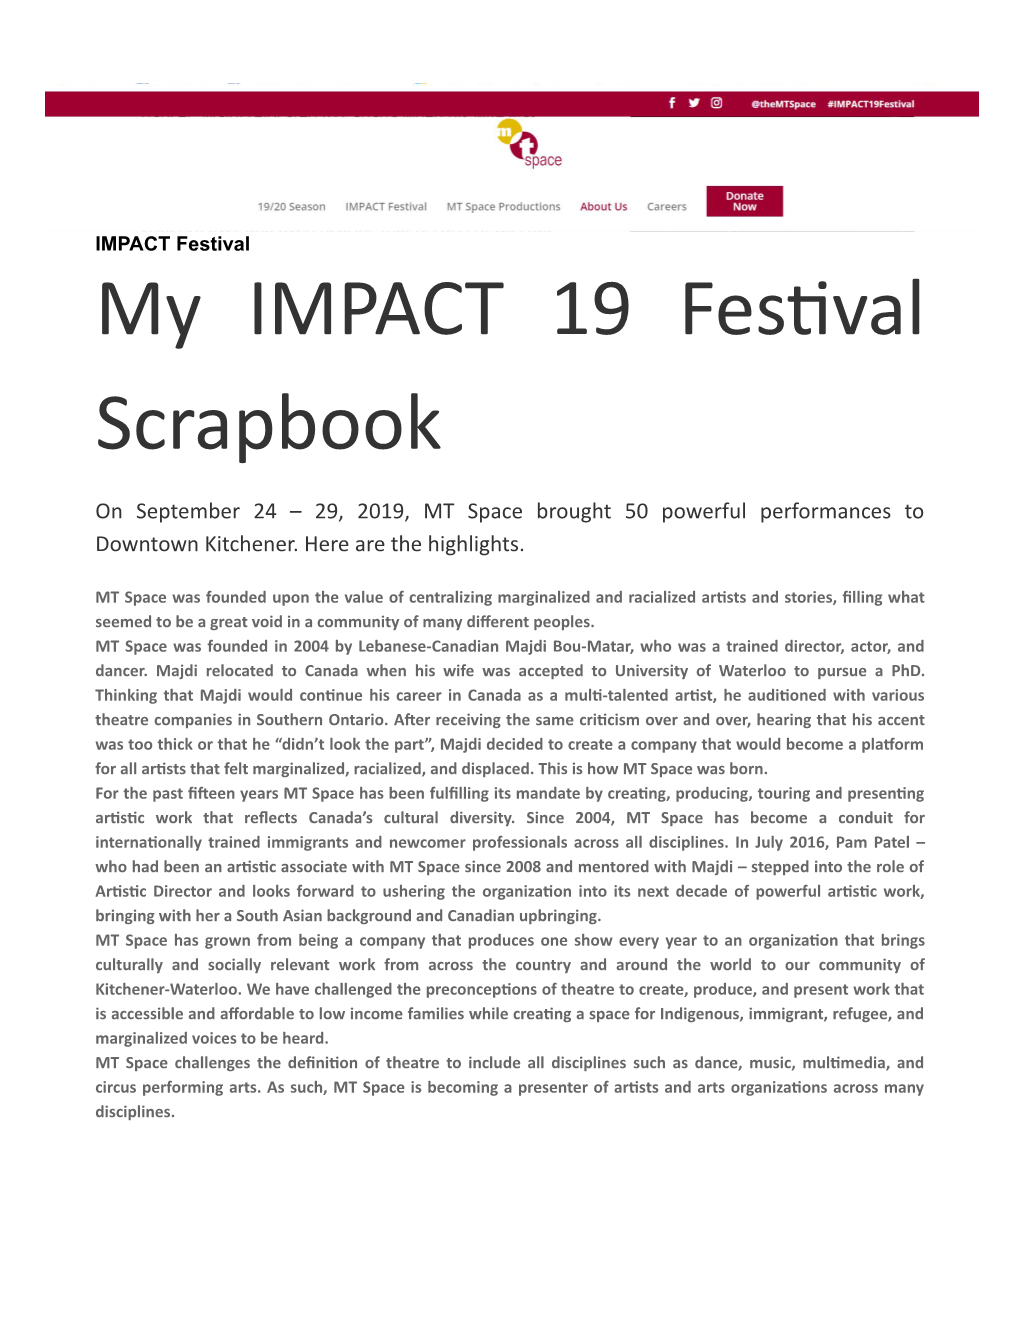 My IMPACT 19 Festival Scrapbook